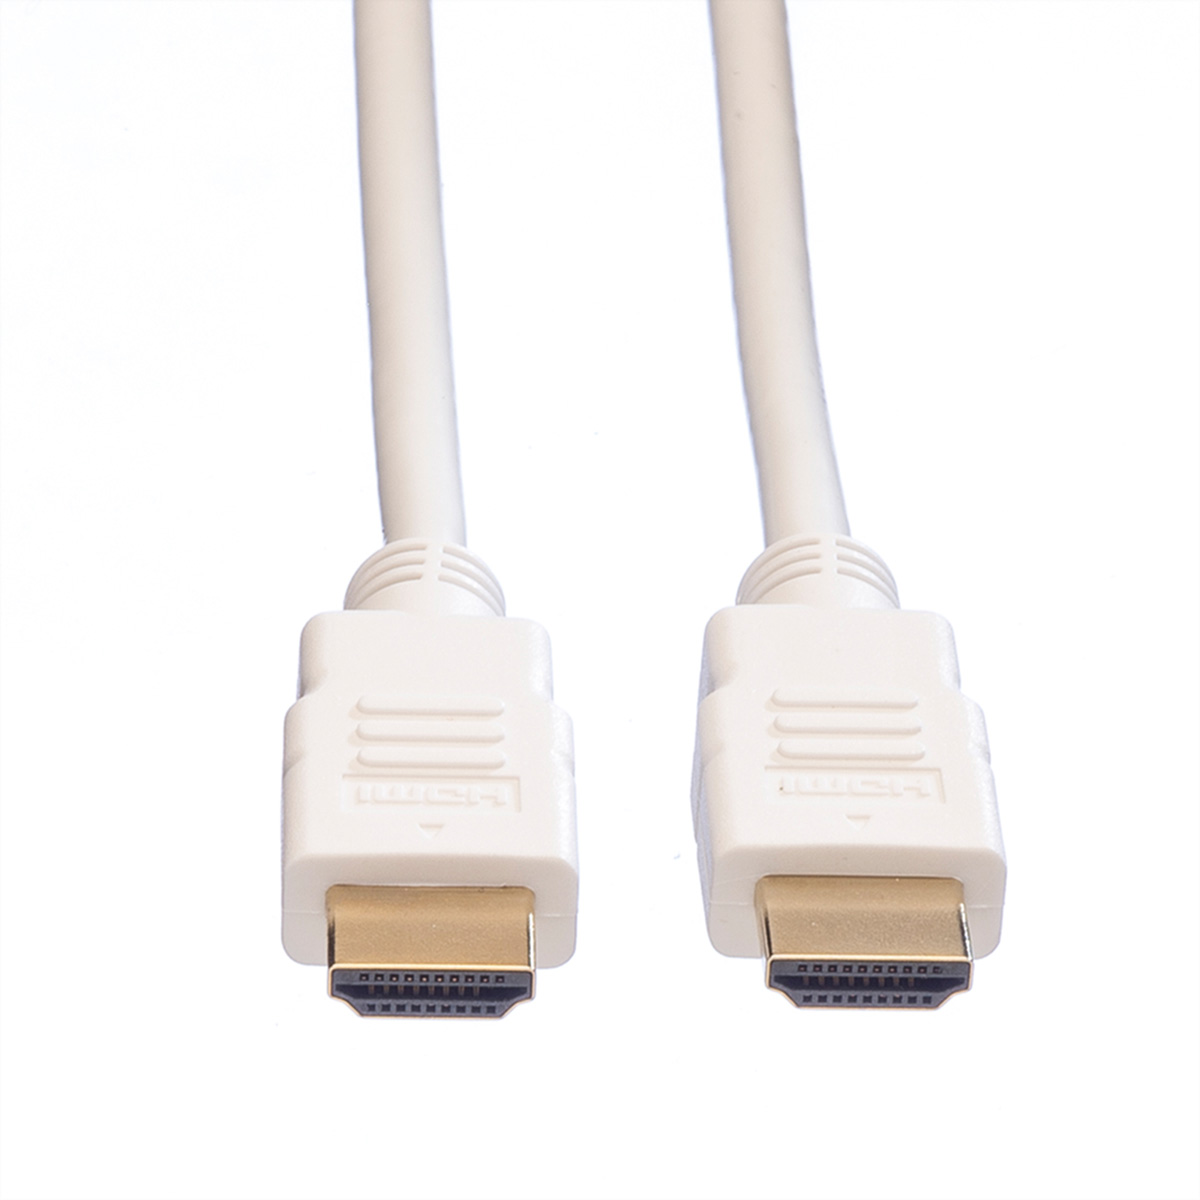 ROLINE HDMI High Speed Ethernet Ethernet HDMI Kabel High Kabel Speed mit mit